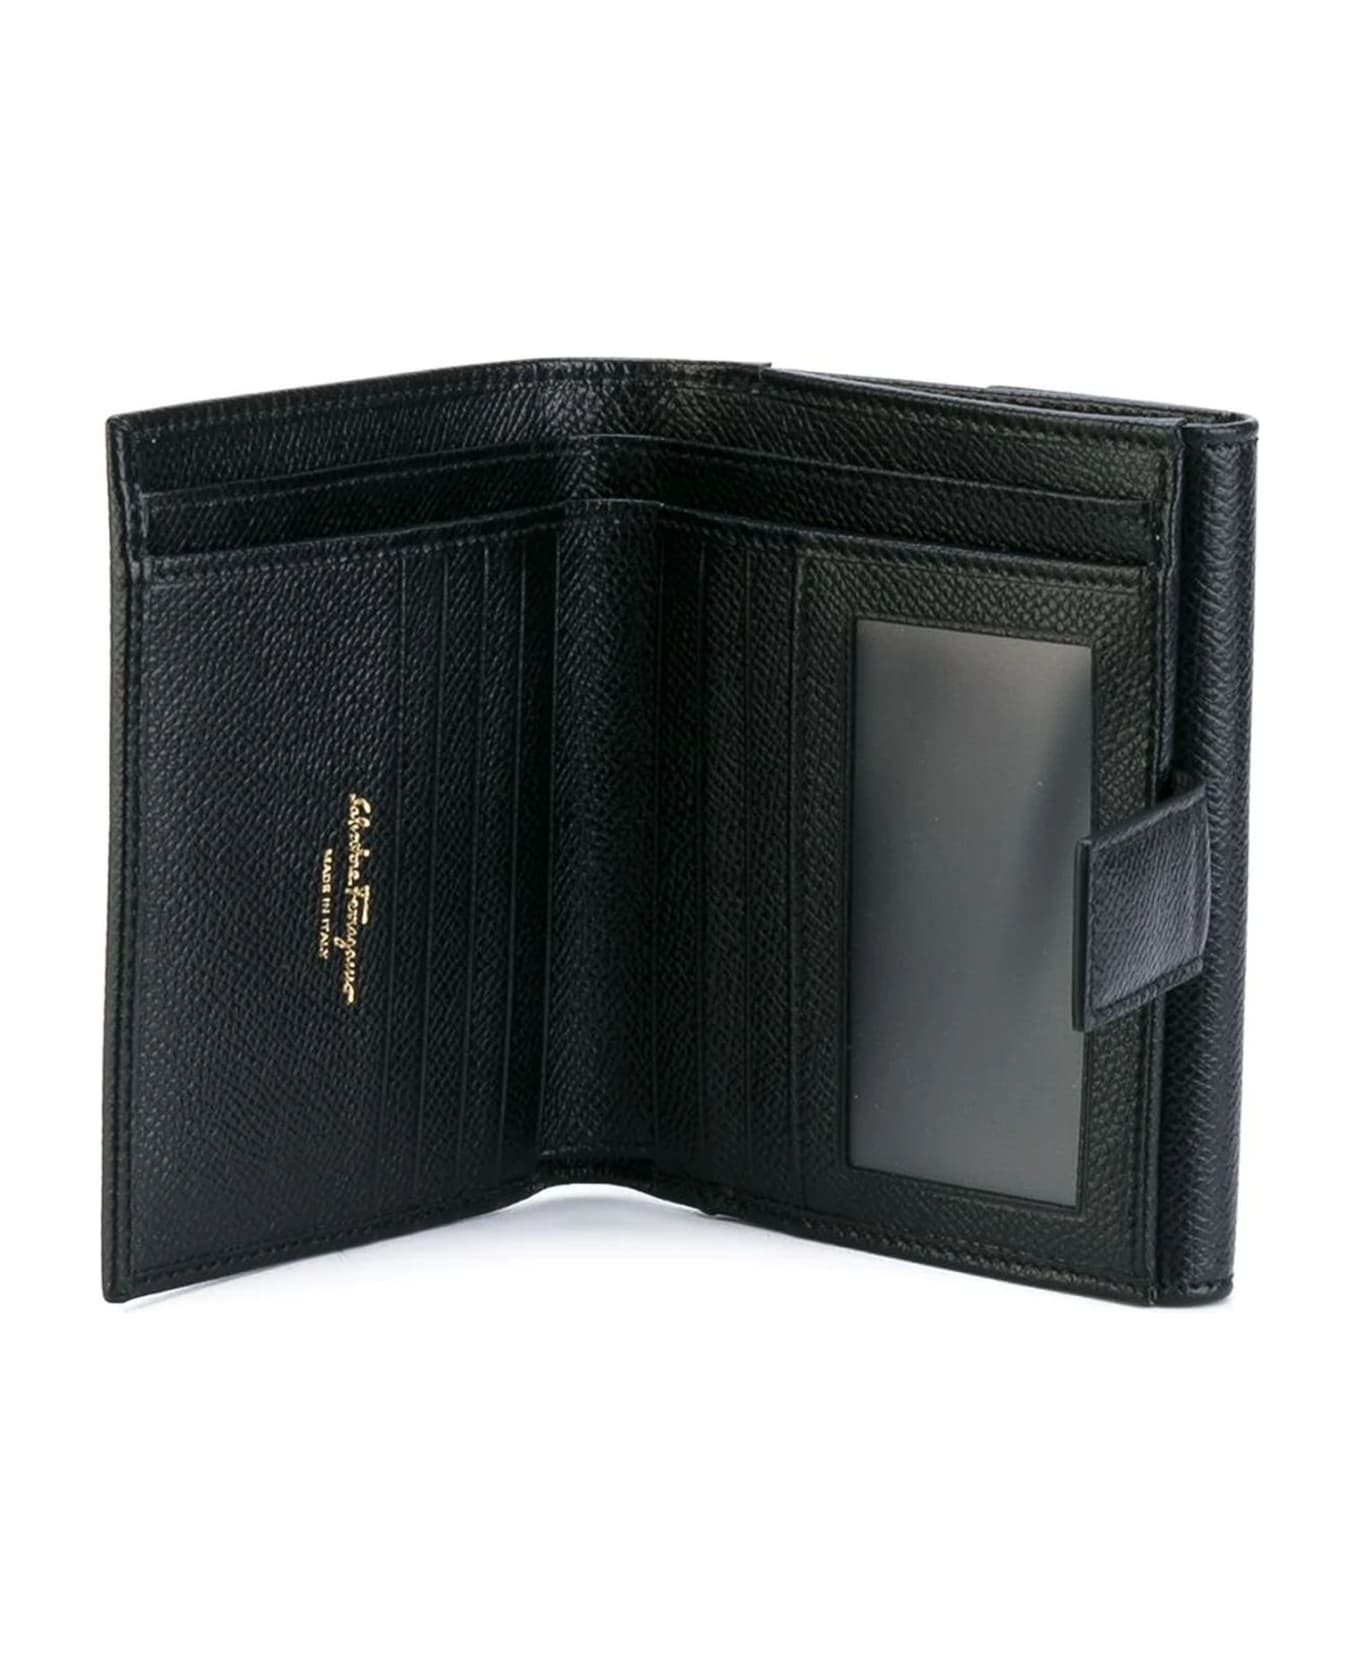 Ferragamo Black Leather Wallet - Black